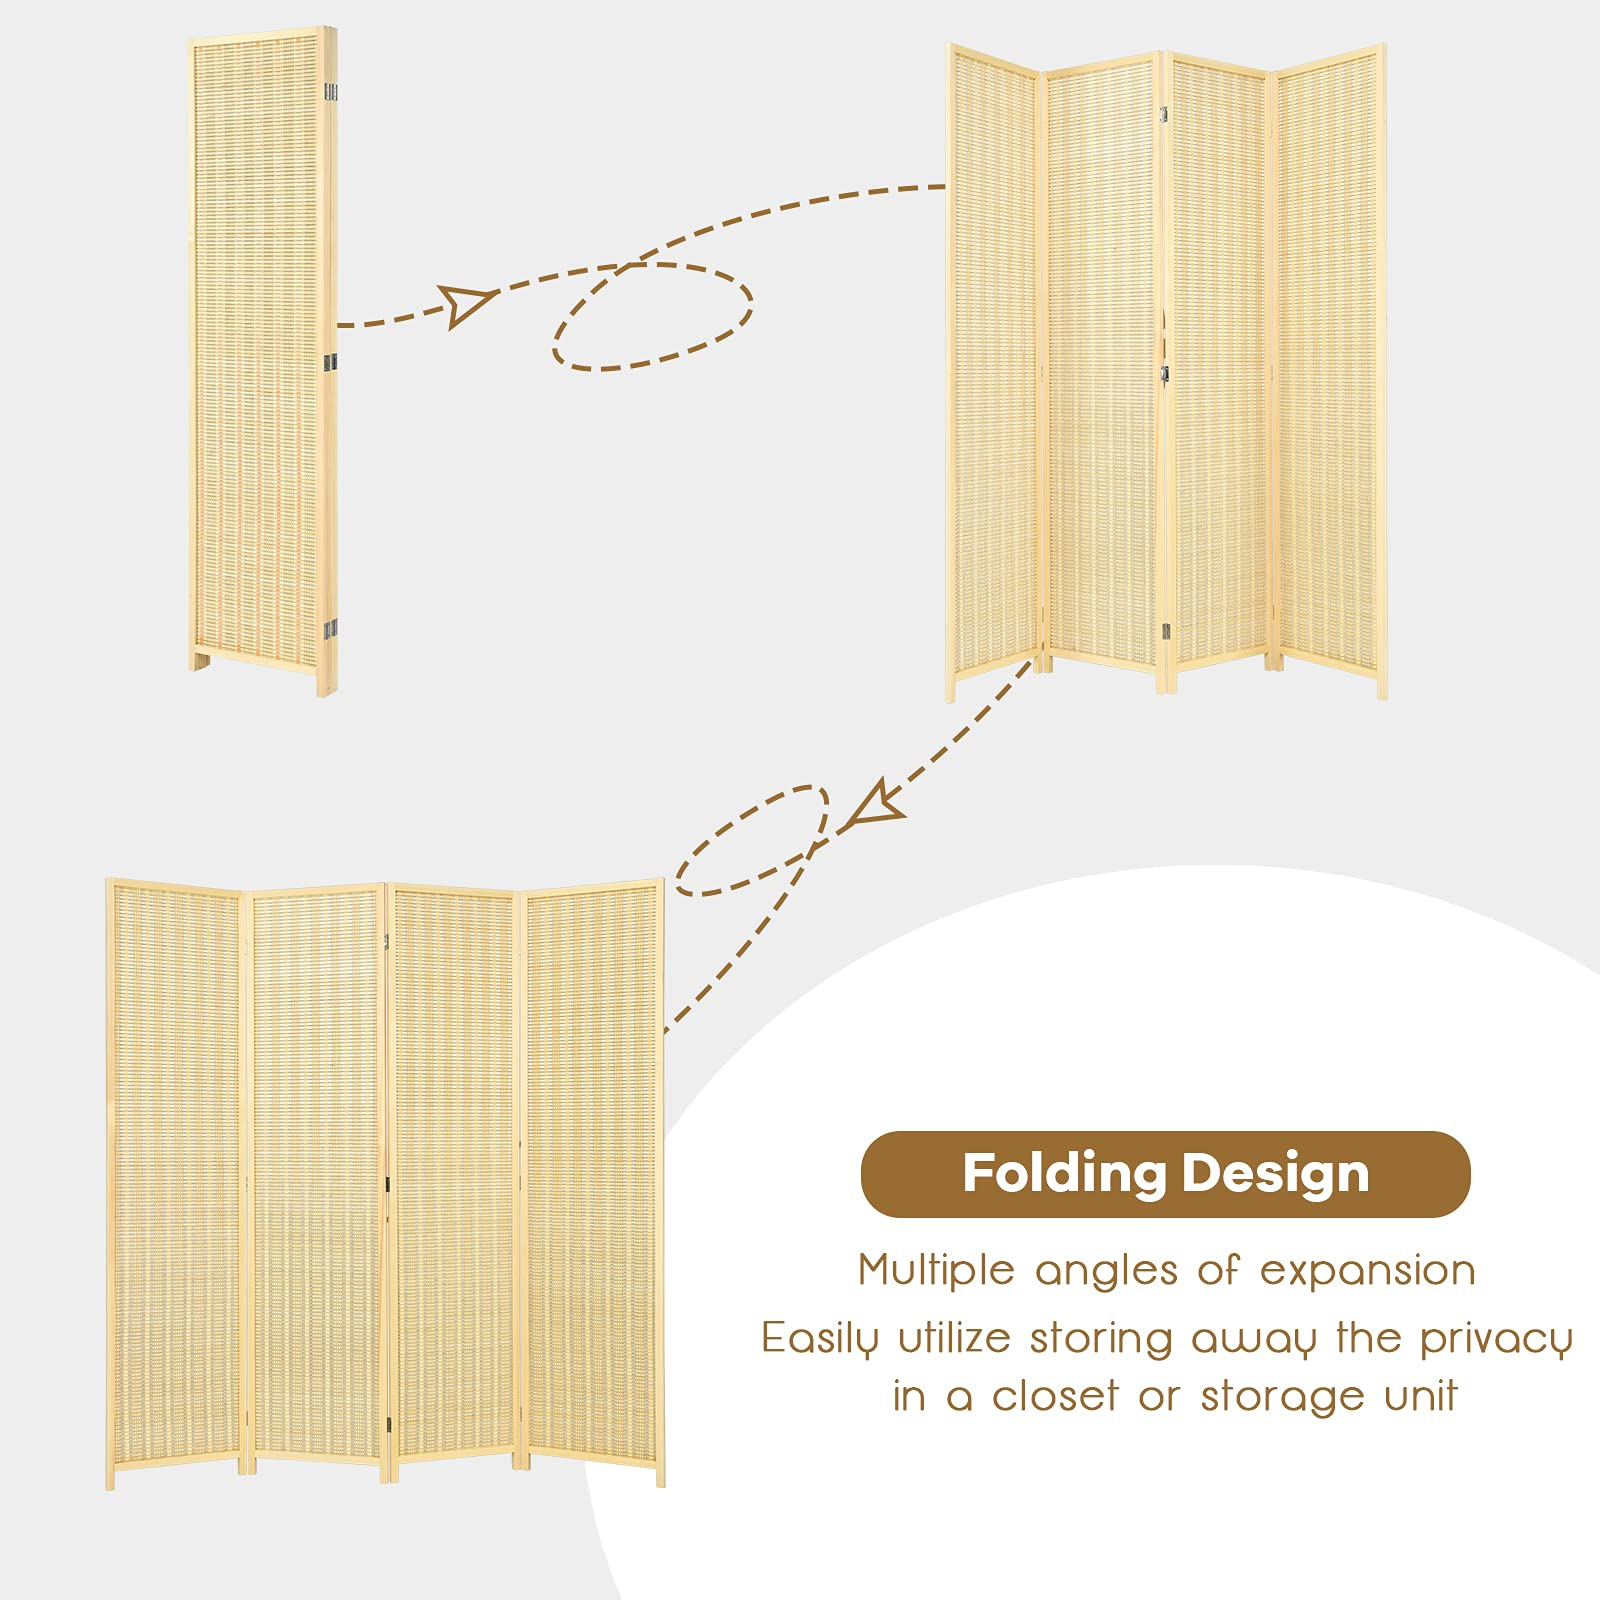 Giantex 4 Panel 6 Ft Tall Bamboo Room Divider, Folding Privacy Screen, Natural - Giantexus